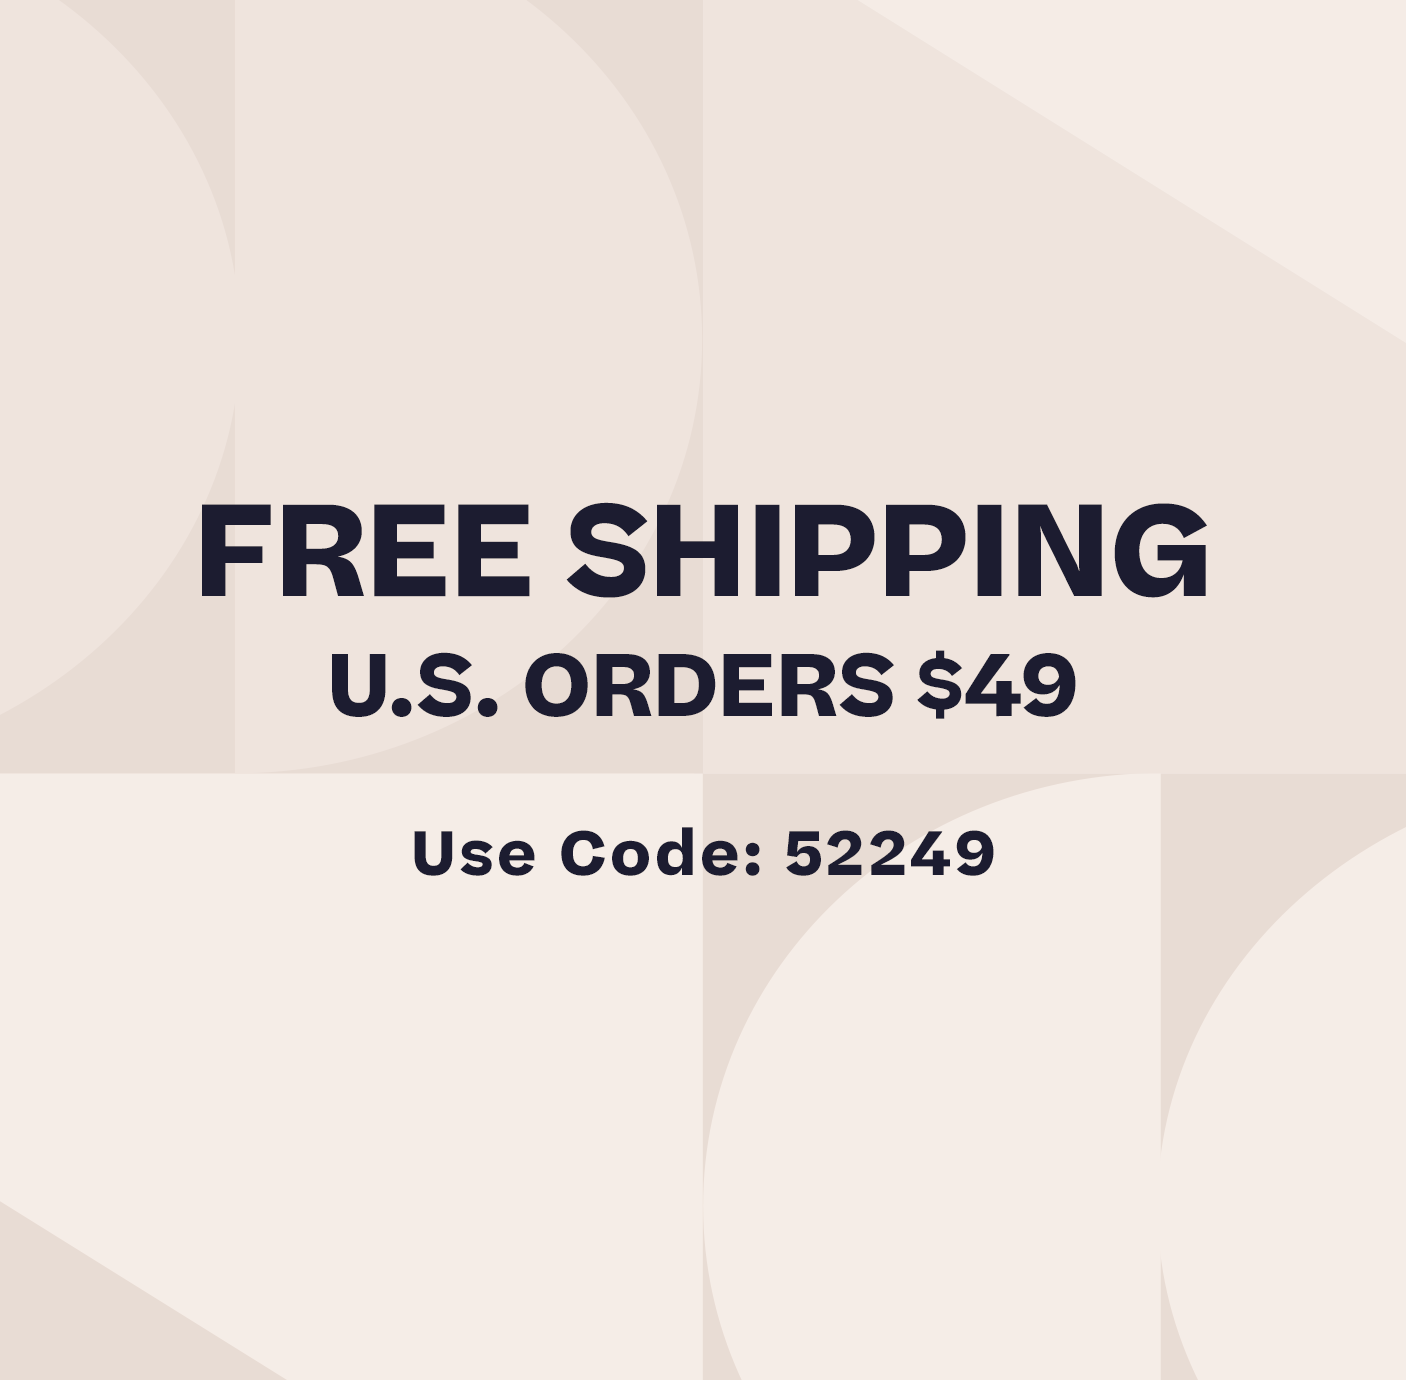 Free Shipping U.S. orders $49 code 52249